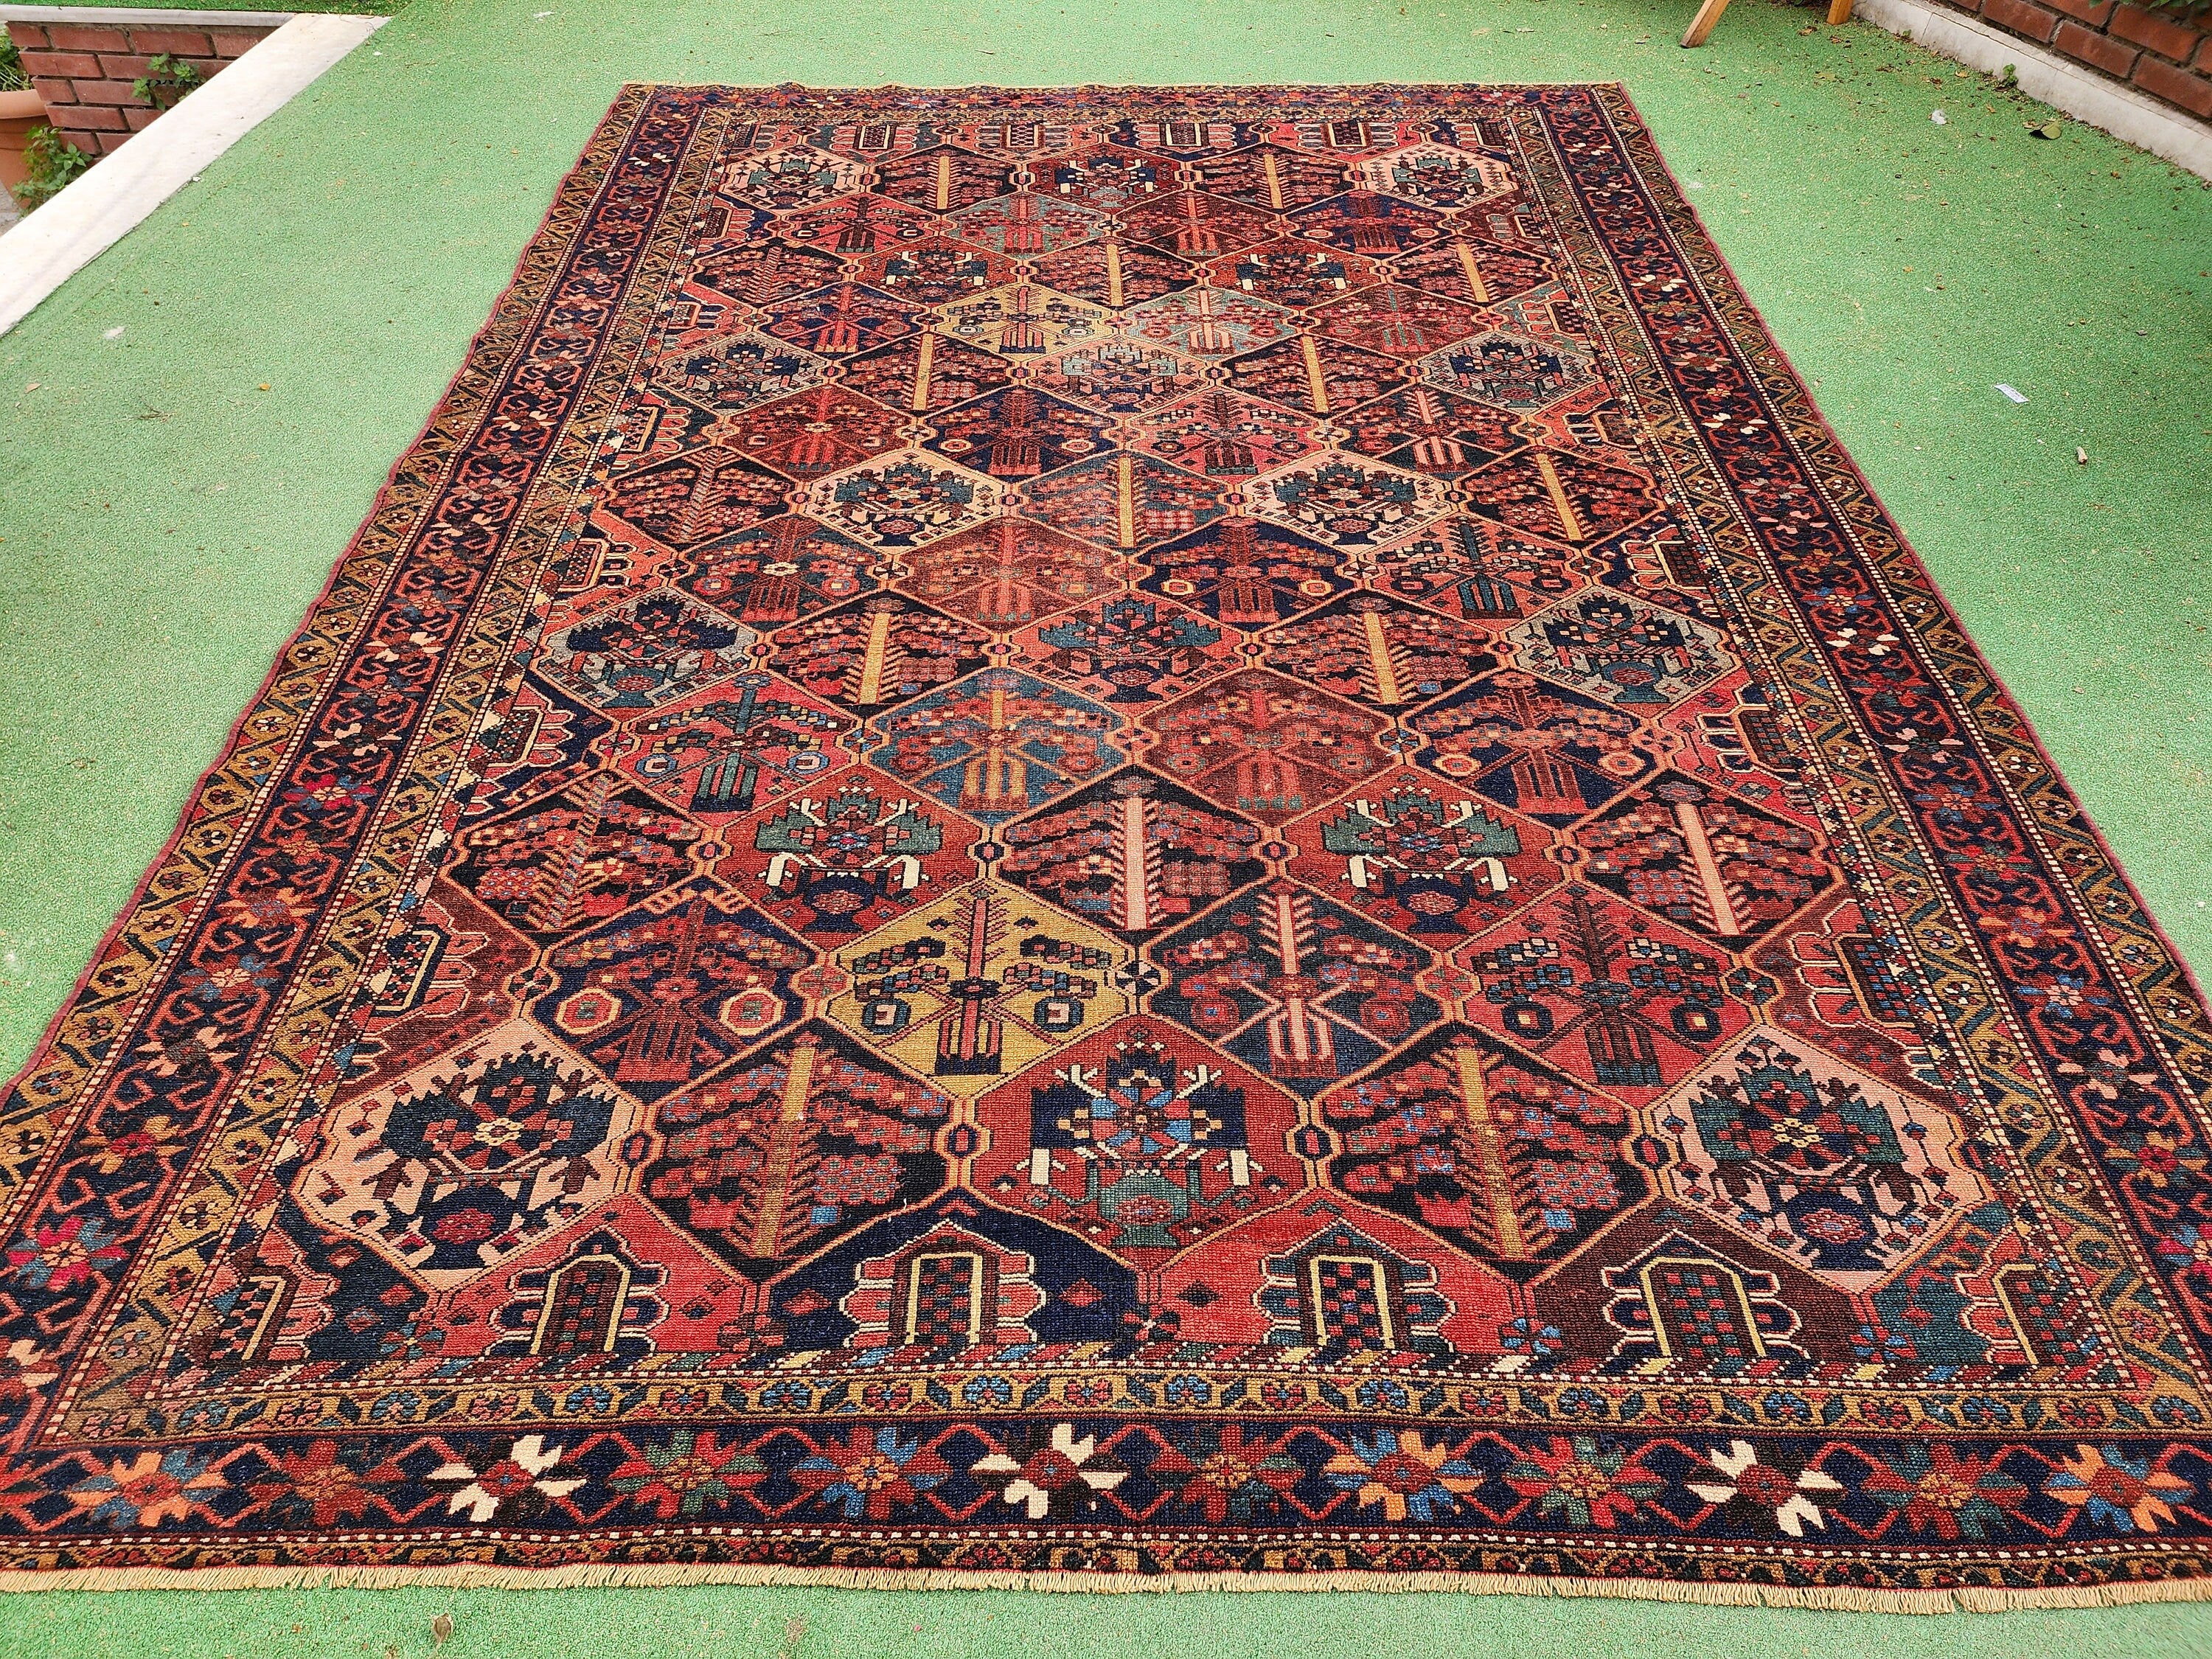 Red and Blue Antique Persian Rug 10 x 7 ft Vintage Turkish Handmade Carpet, Natural Wool Boho Retro Bedroom Dining or Living Room Floor Rug